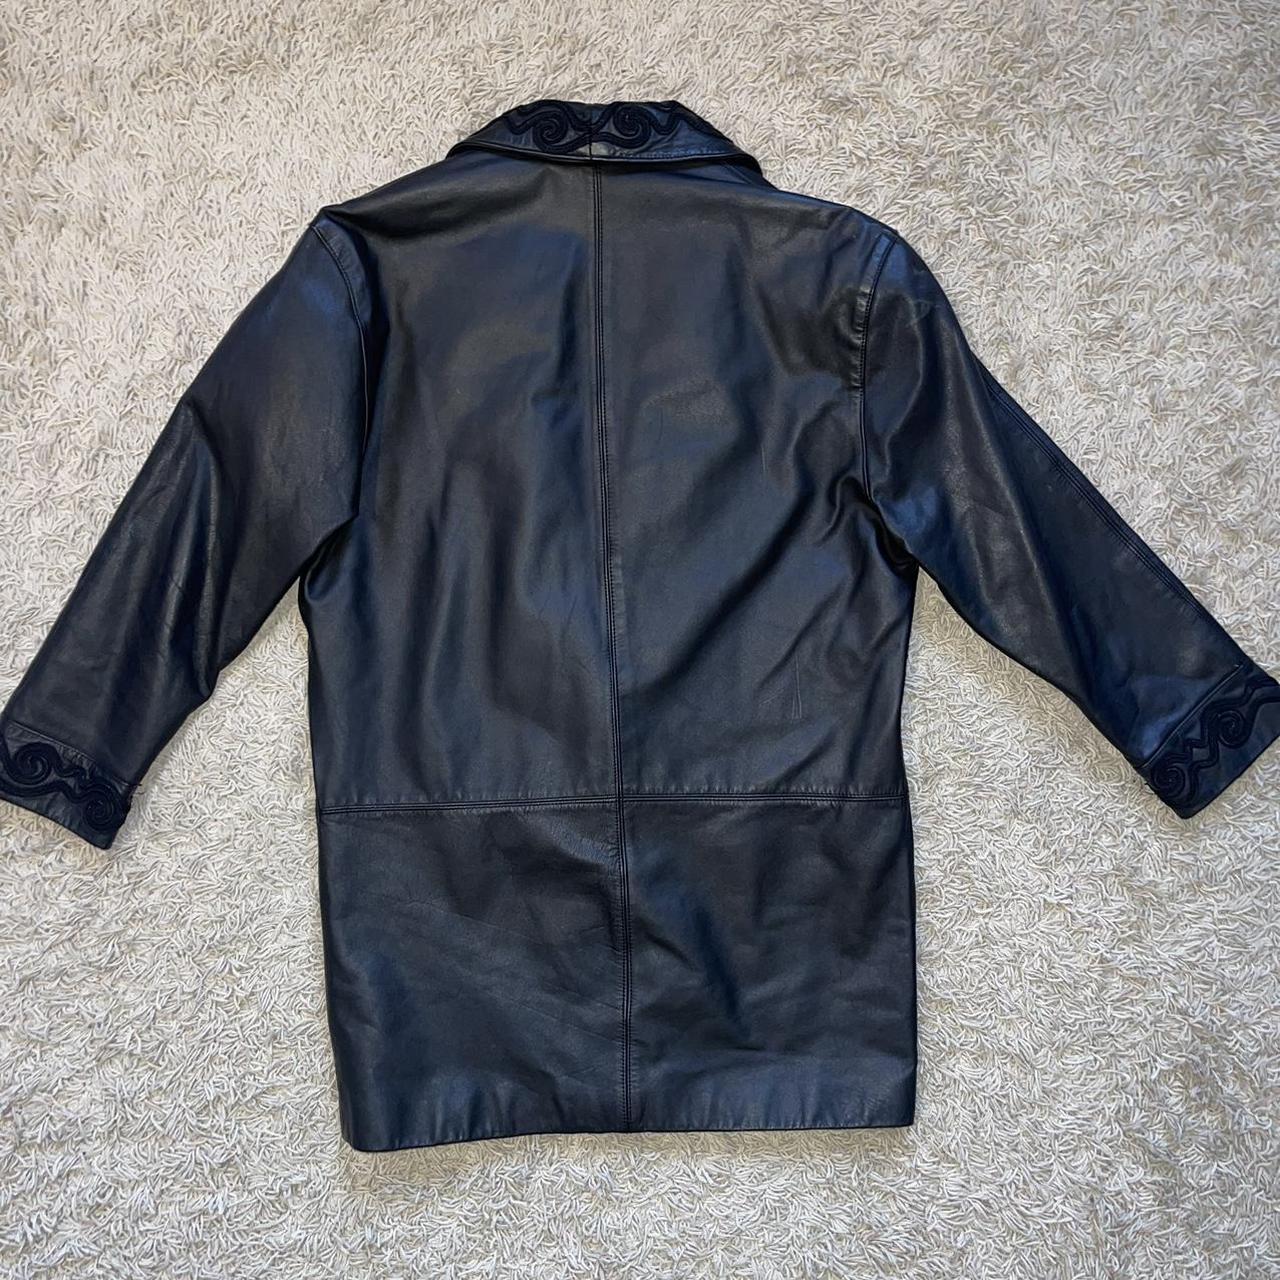 Vintage 1980s oversized black leather coat with... - Depop